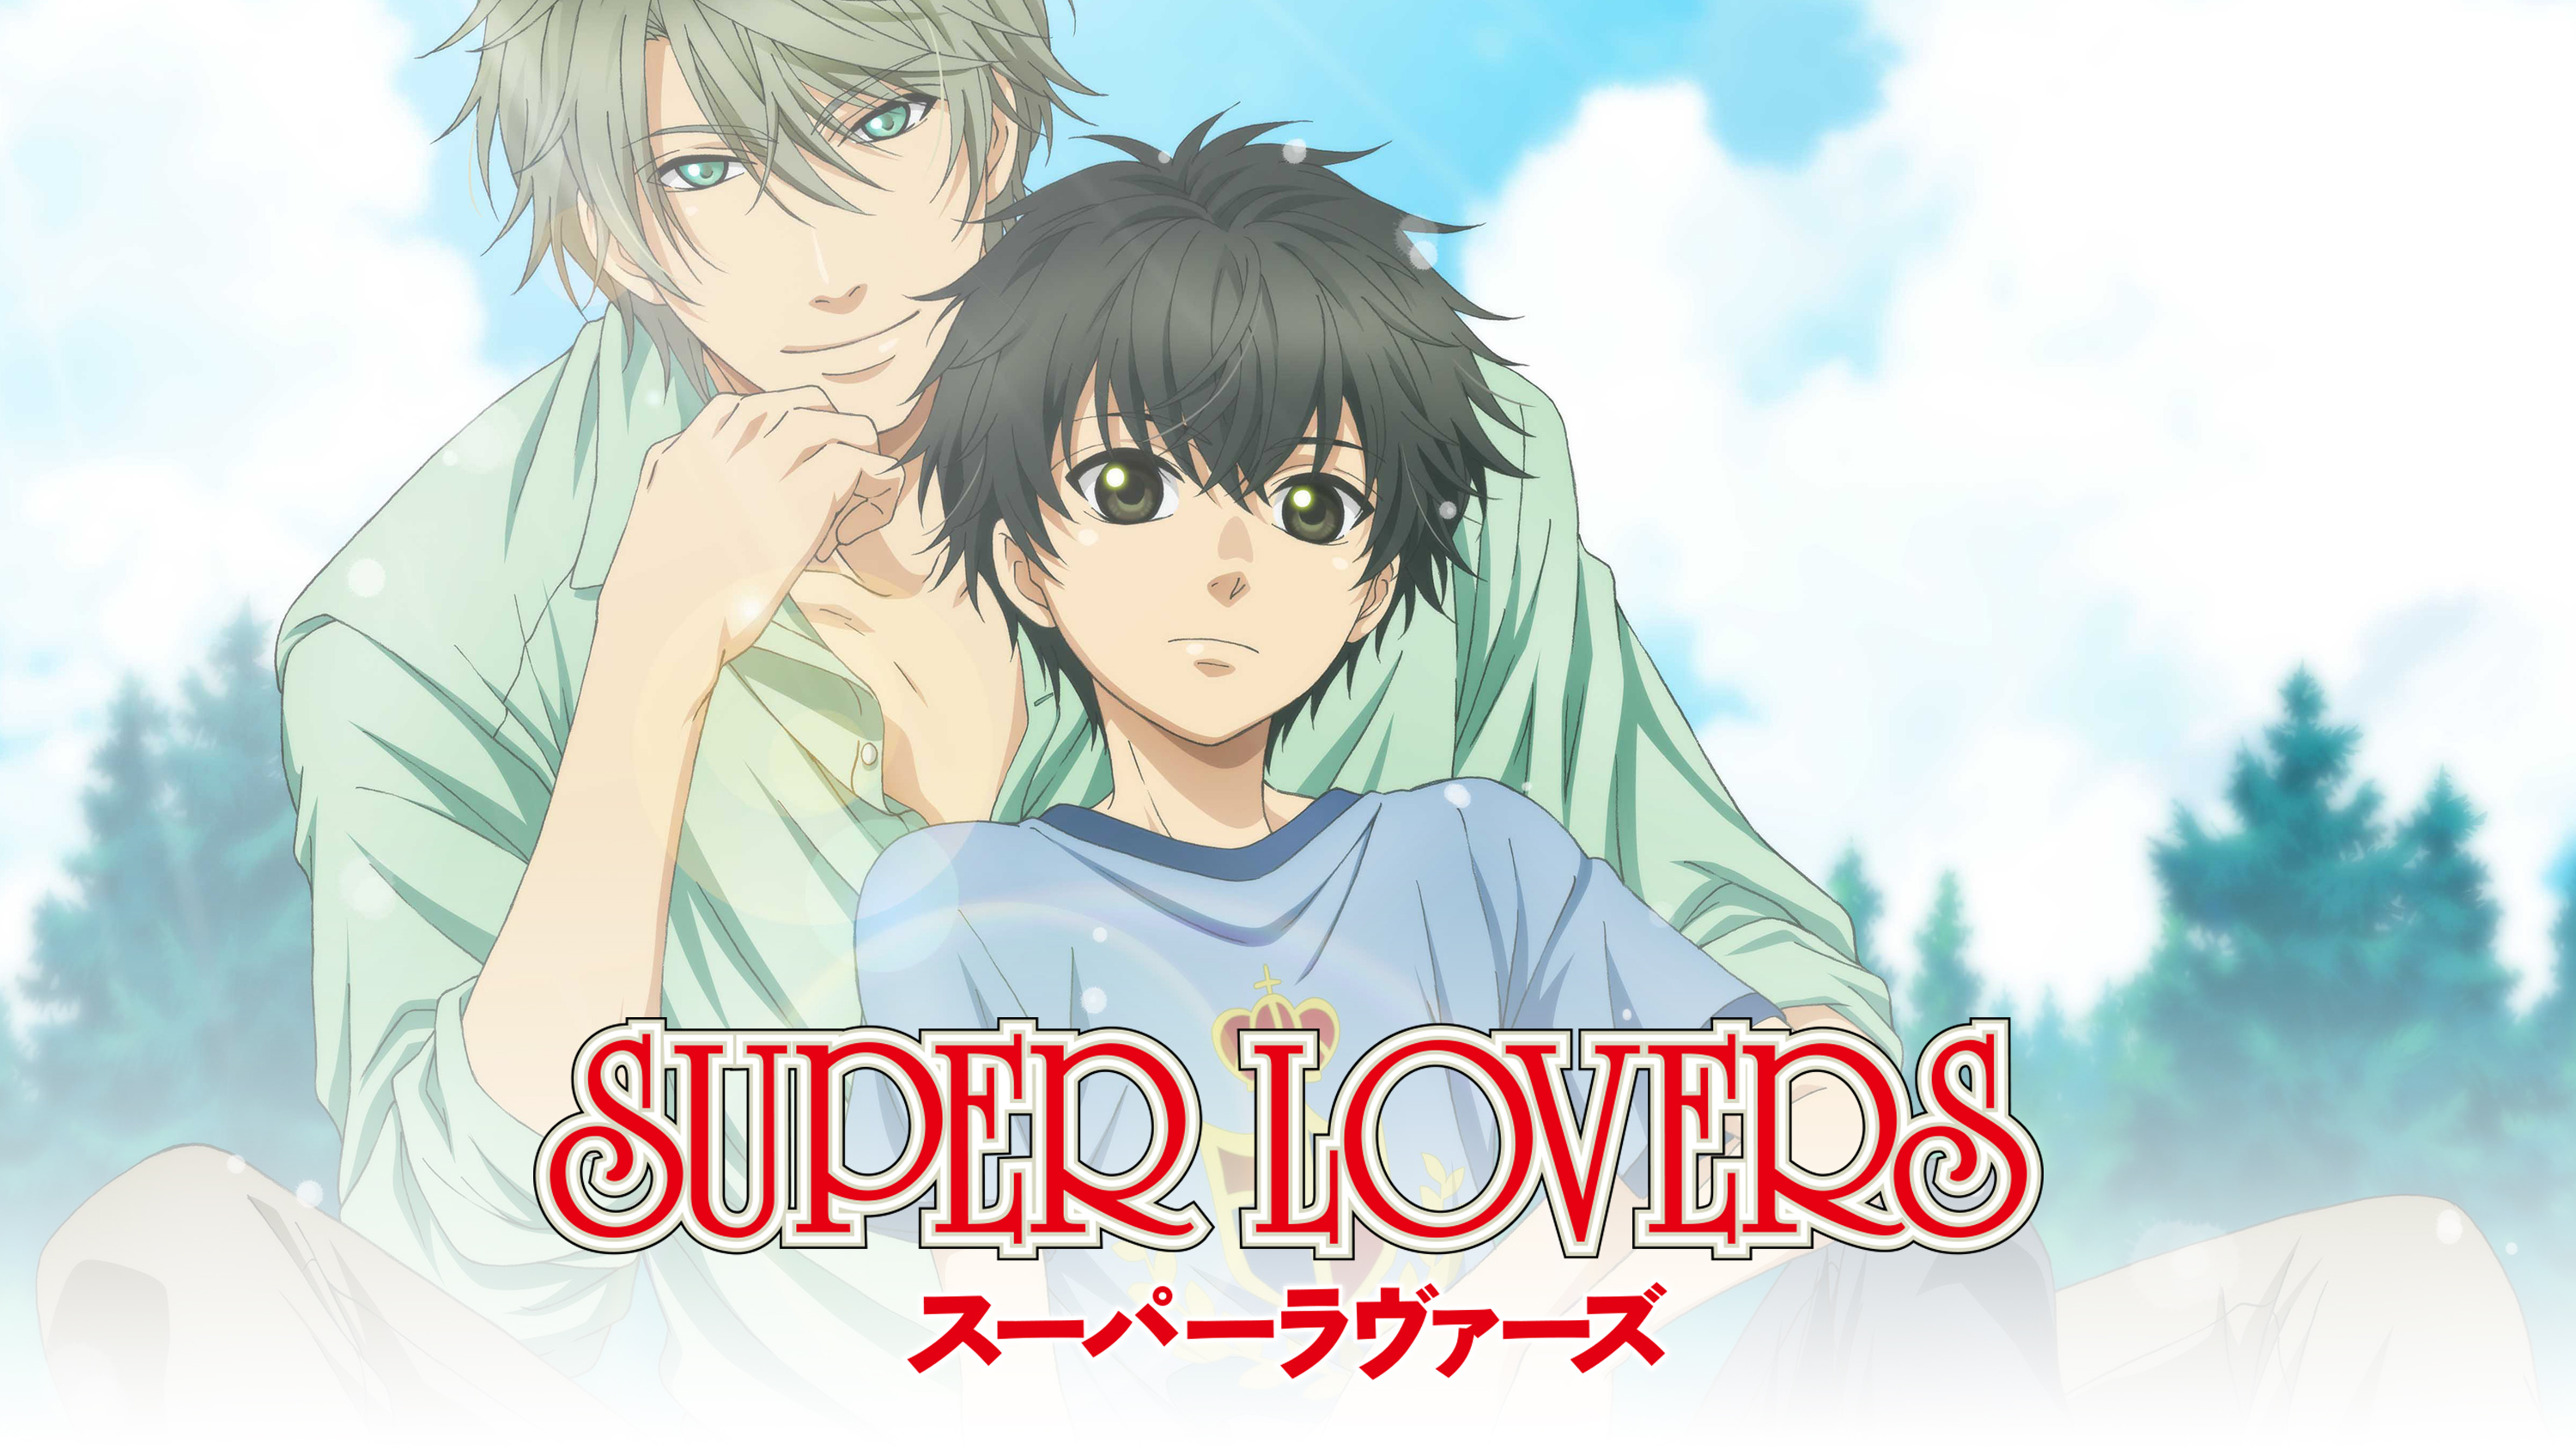 Super lovers Хару и РЕН